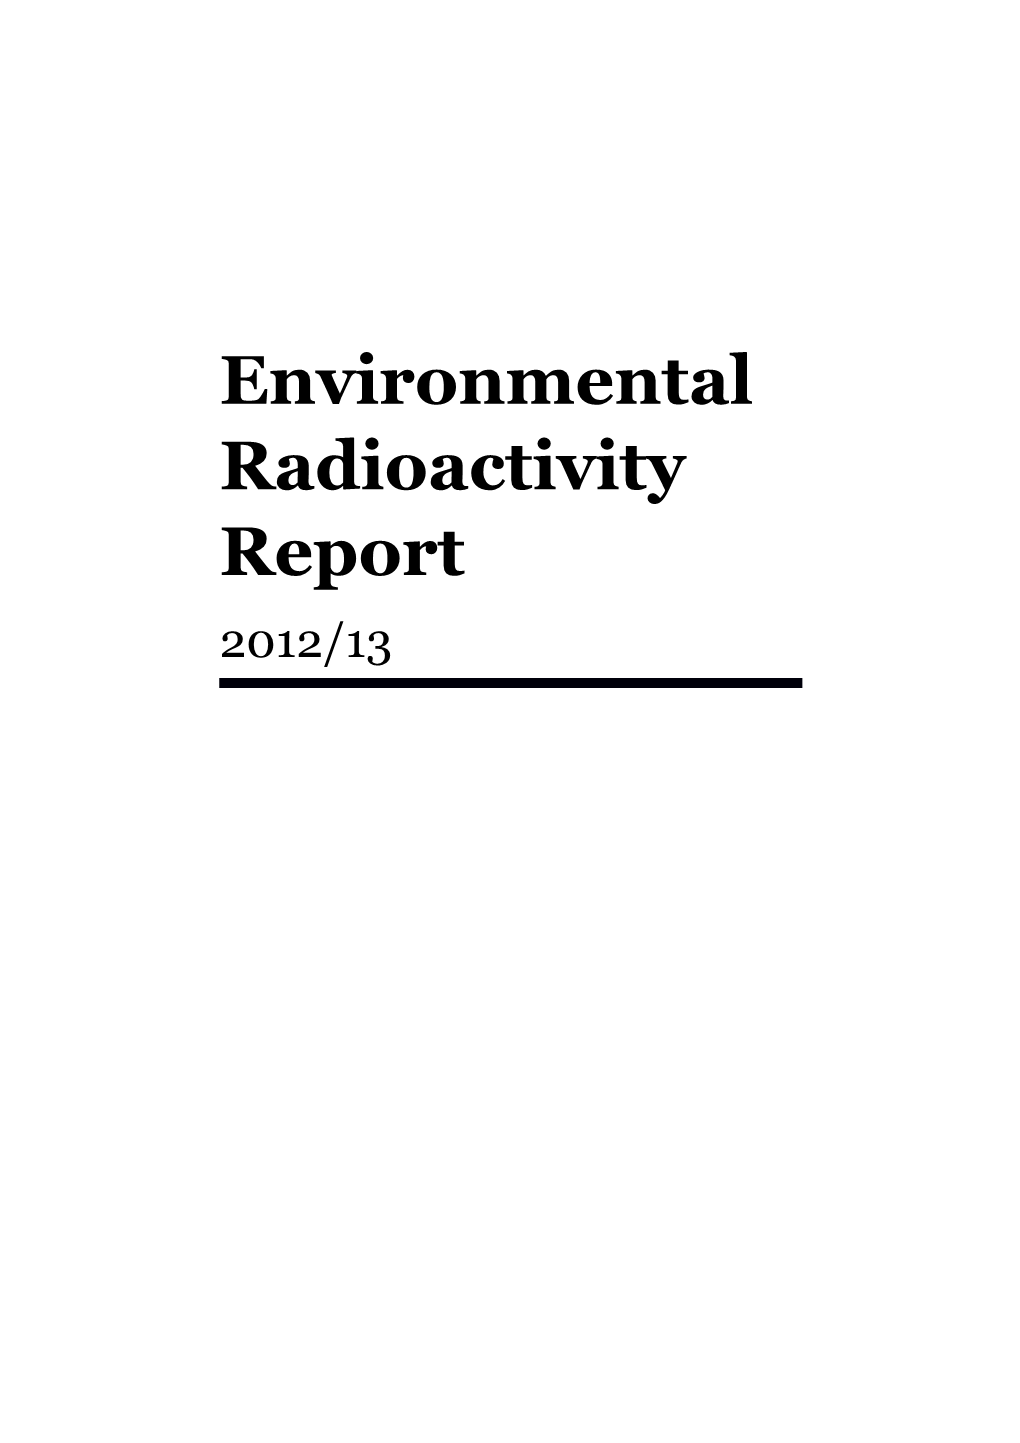 Environmental Radioactivity Report 2012/13